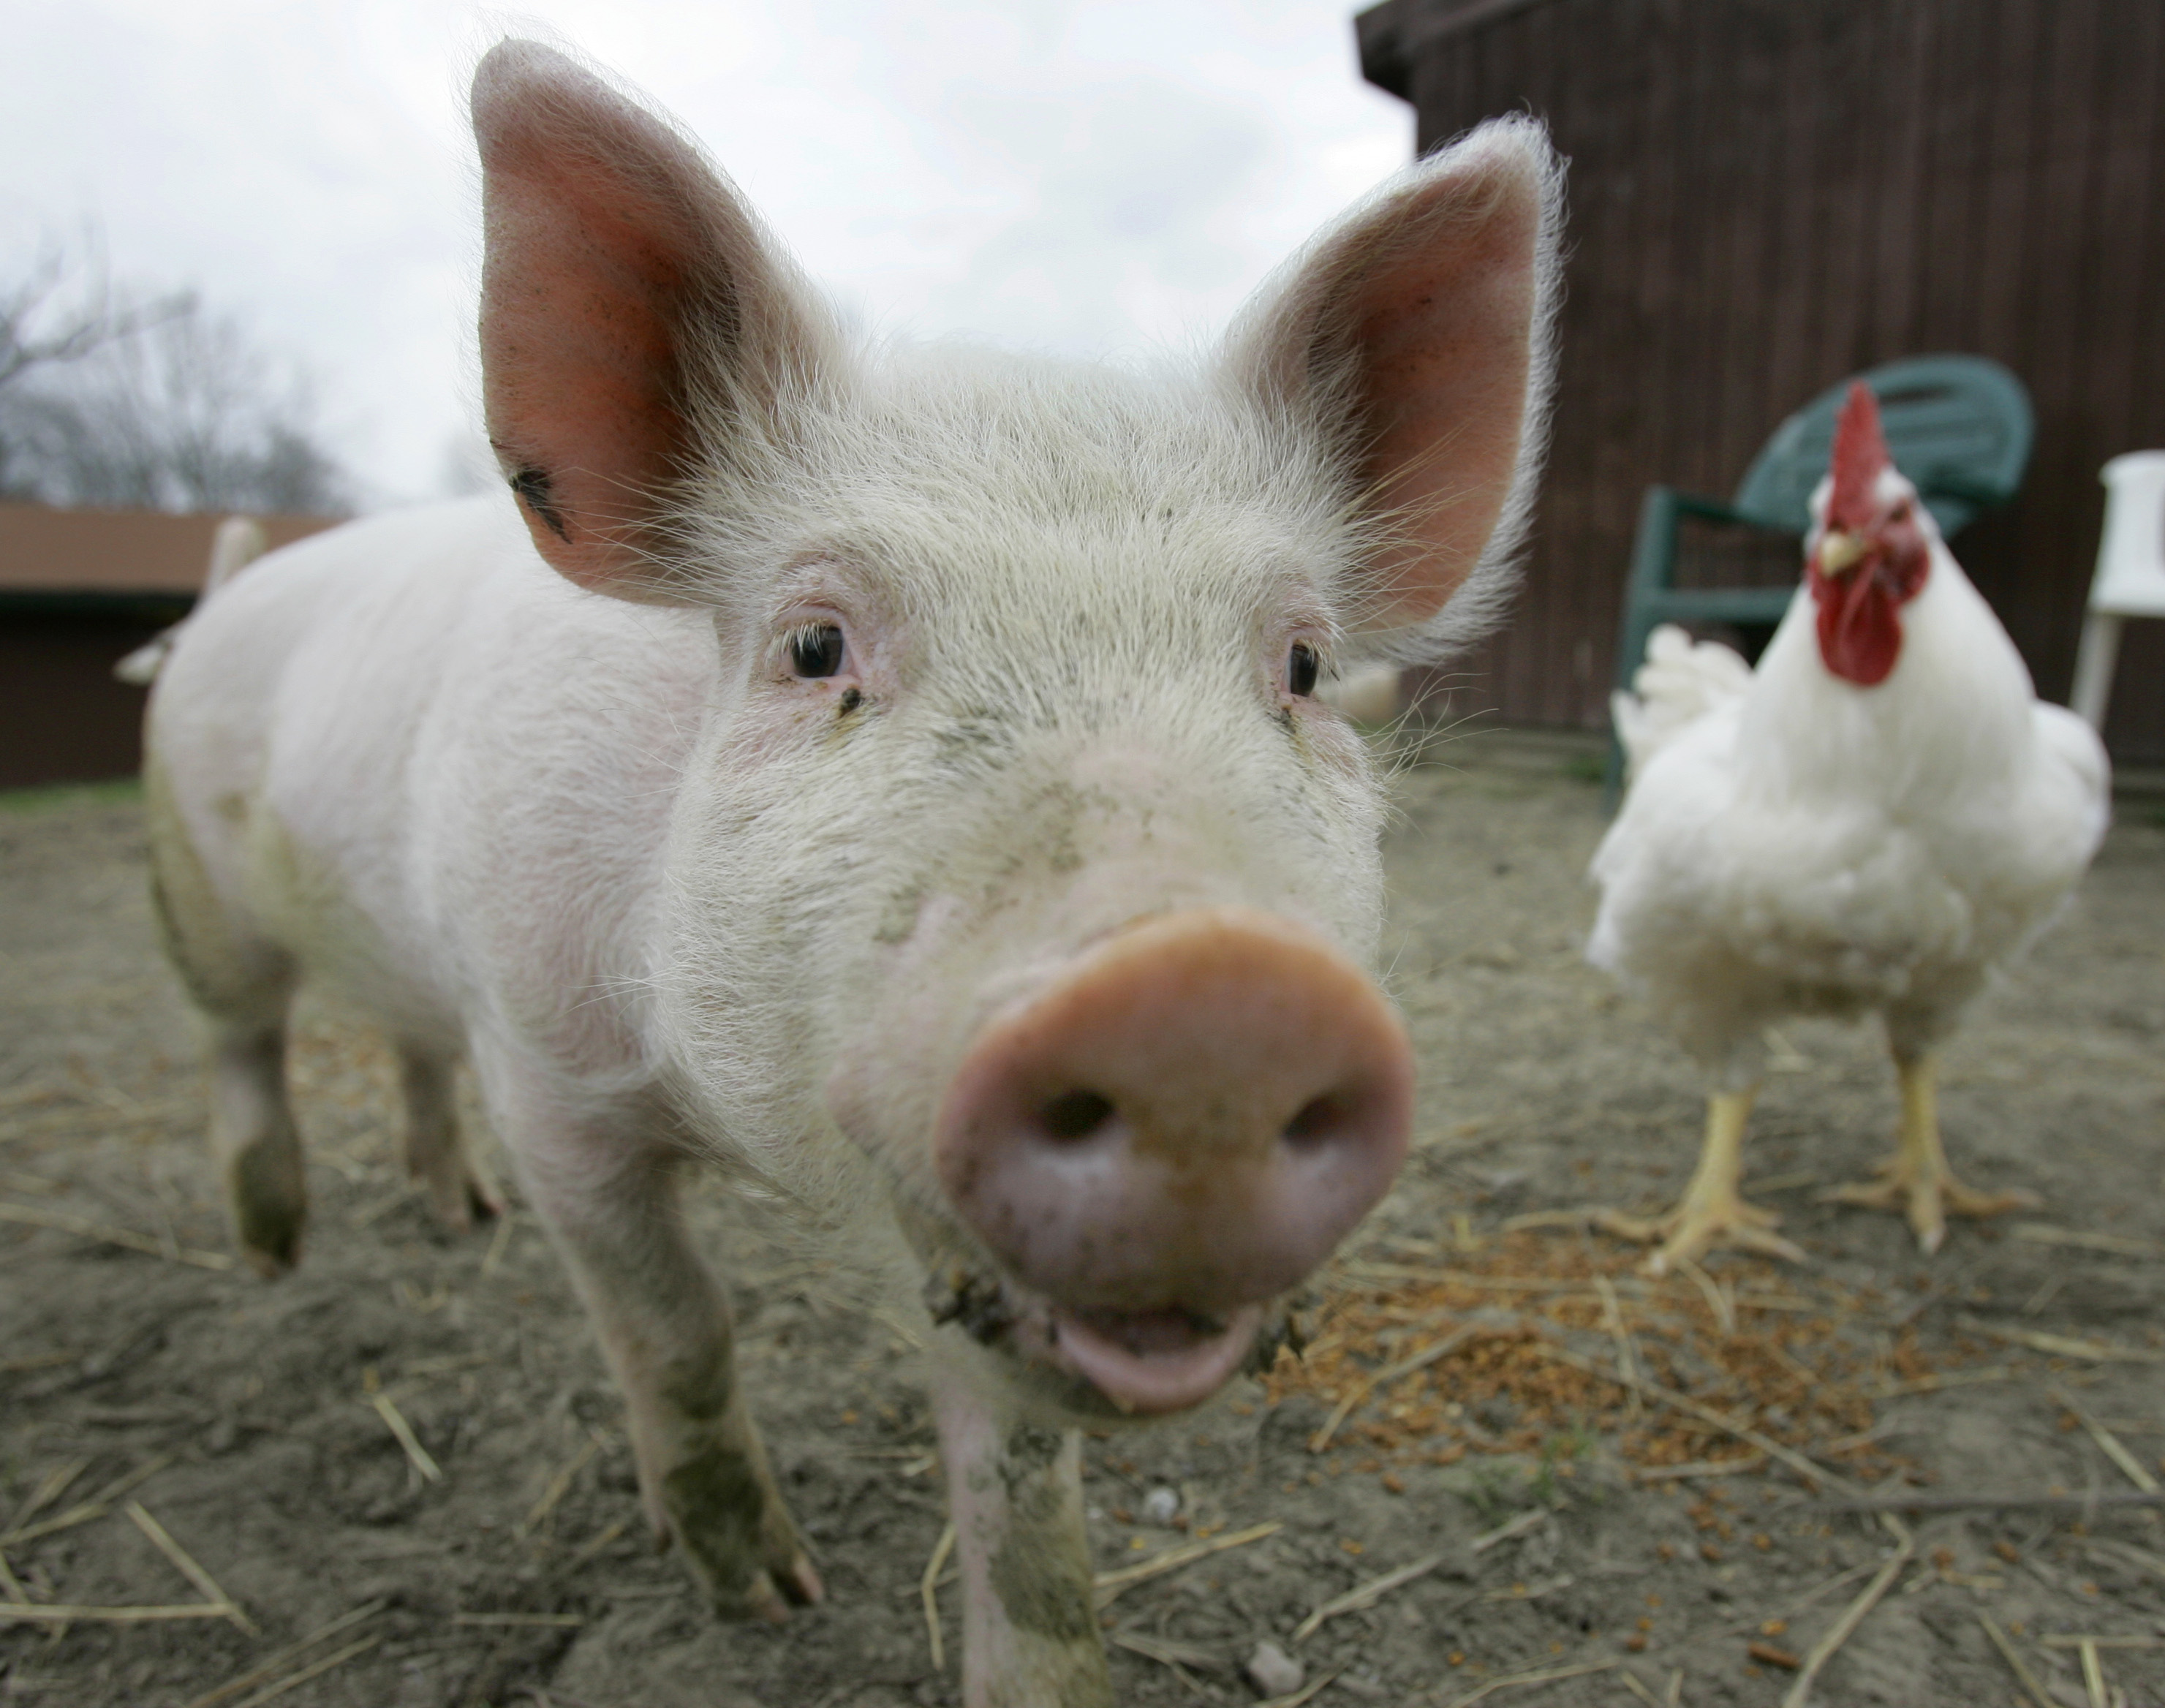 Rethinking Farm Animals